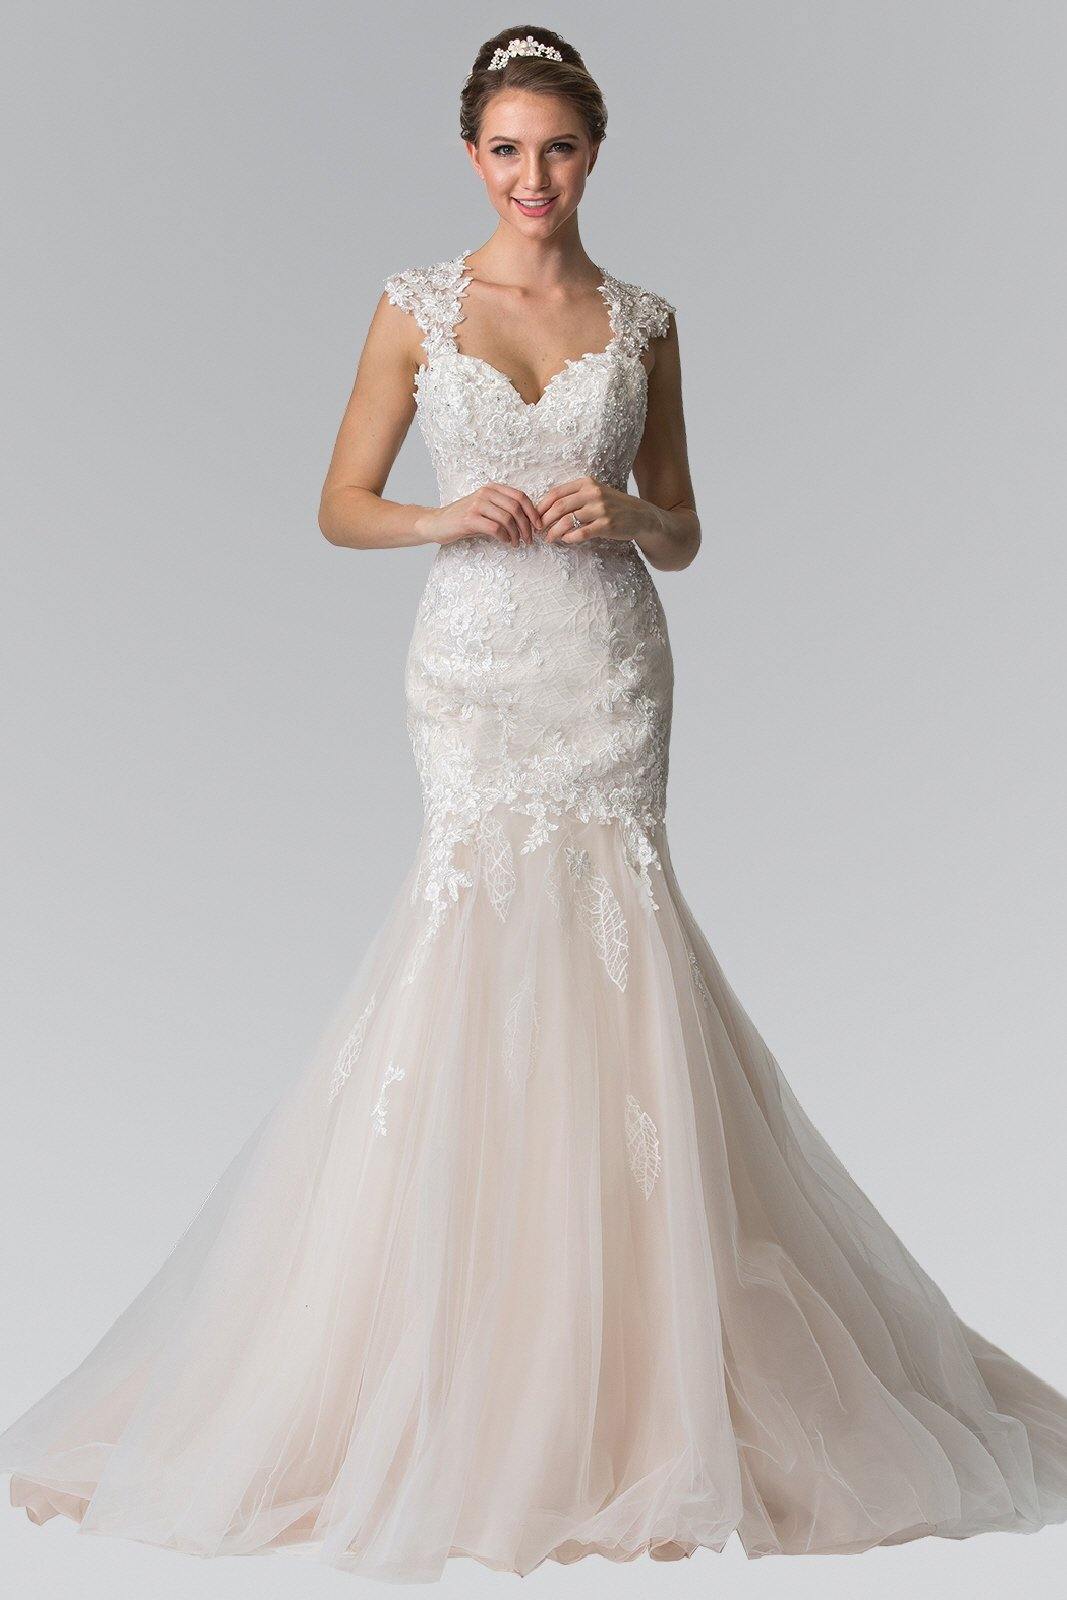 Lace Embellished Long Mermaid Style Wedding Dress - The Dress Outlet Elizabeth K